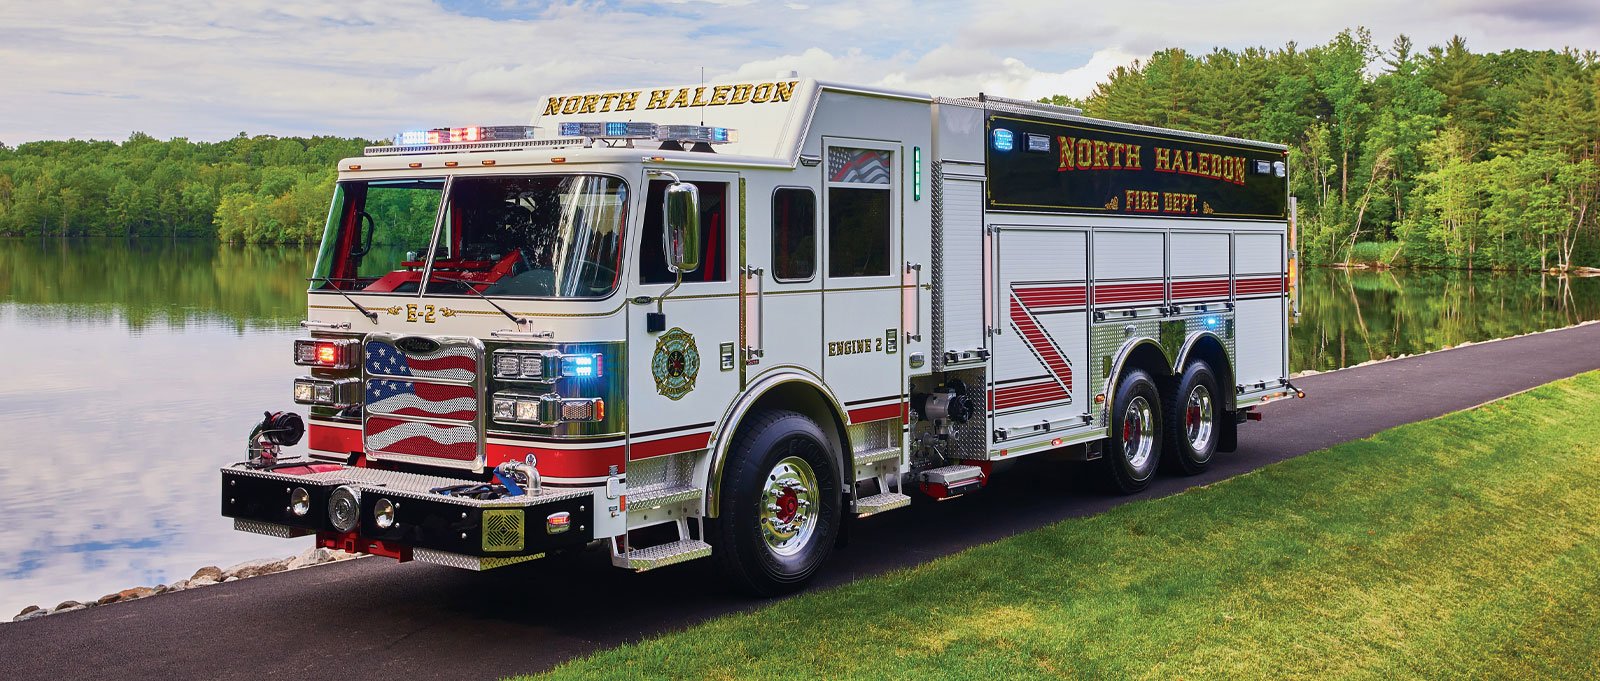 Volunteer Fire Department Apparatus: 5 Features to Enhance Efficiency